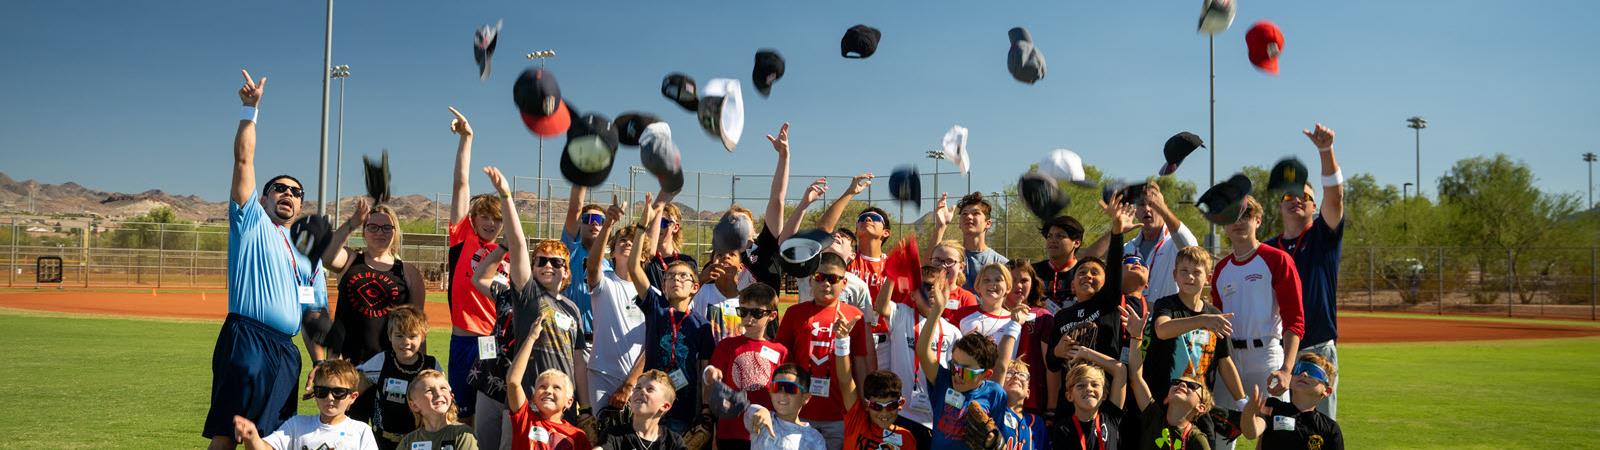 Baseball participants and coaches throw their caps in the air.